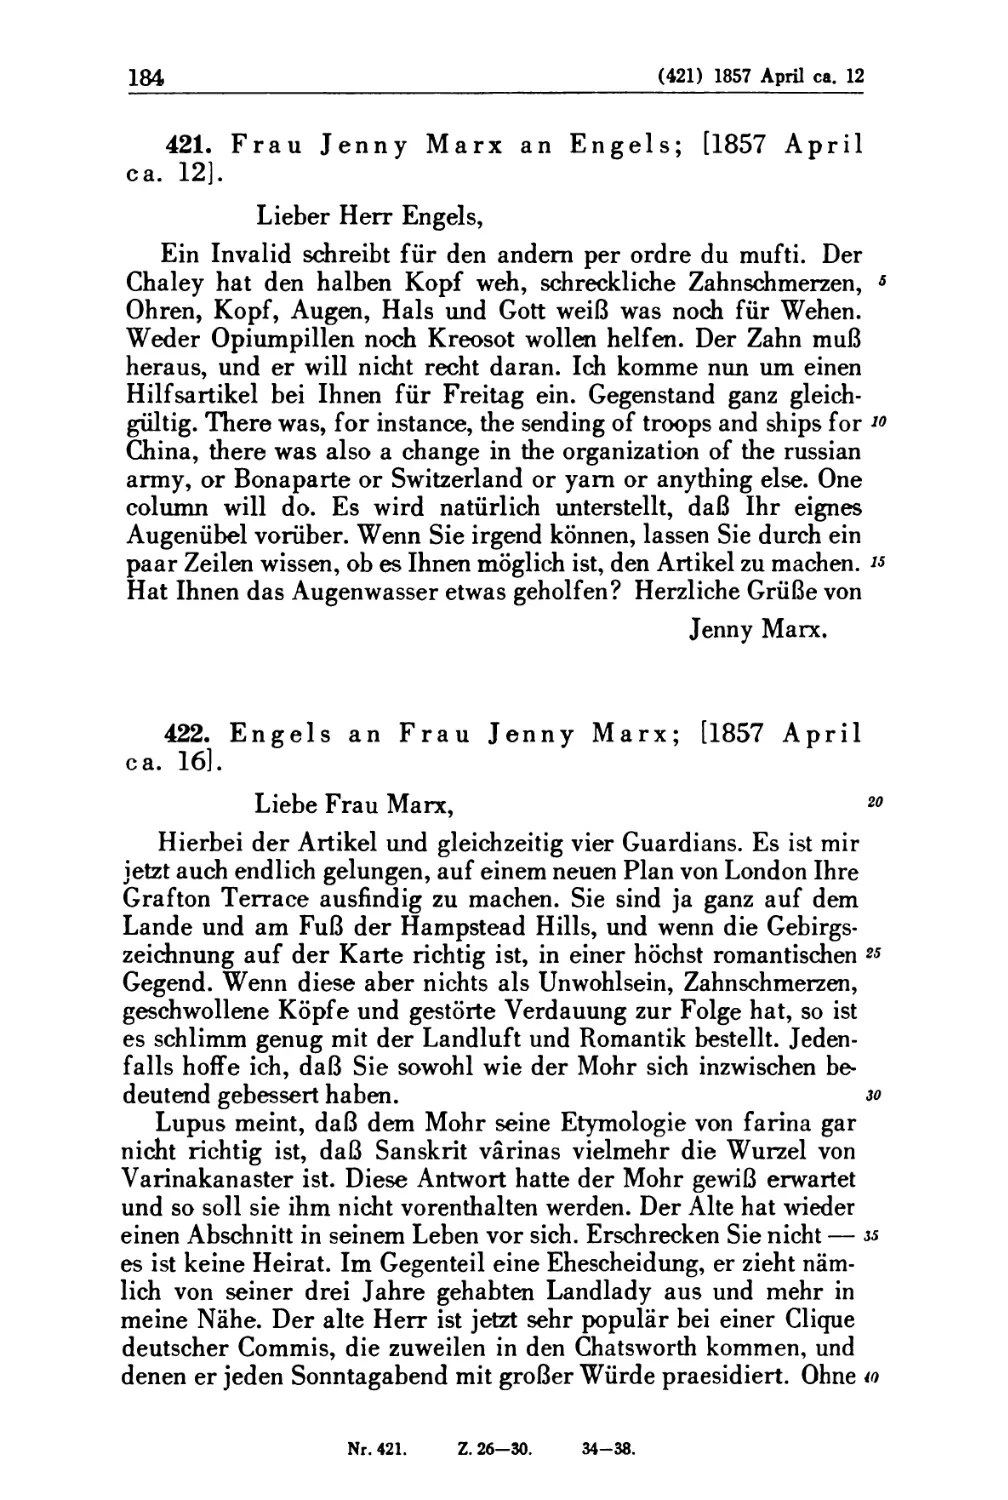 421. Frau Jenny Marx an Engels; [1857 April ca. 12]
422. Engels an Frau Jenny Marx; [1857 April ca. 16]